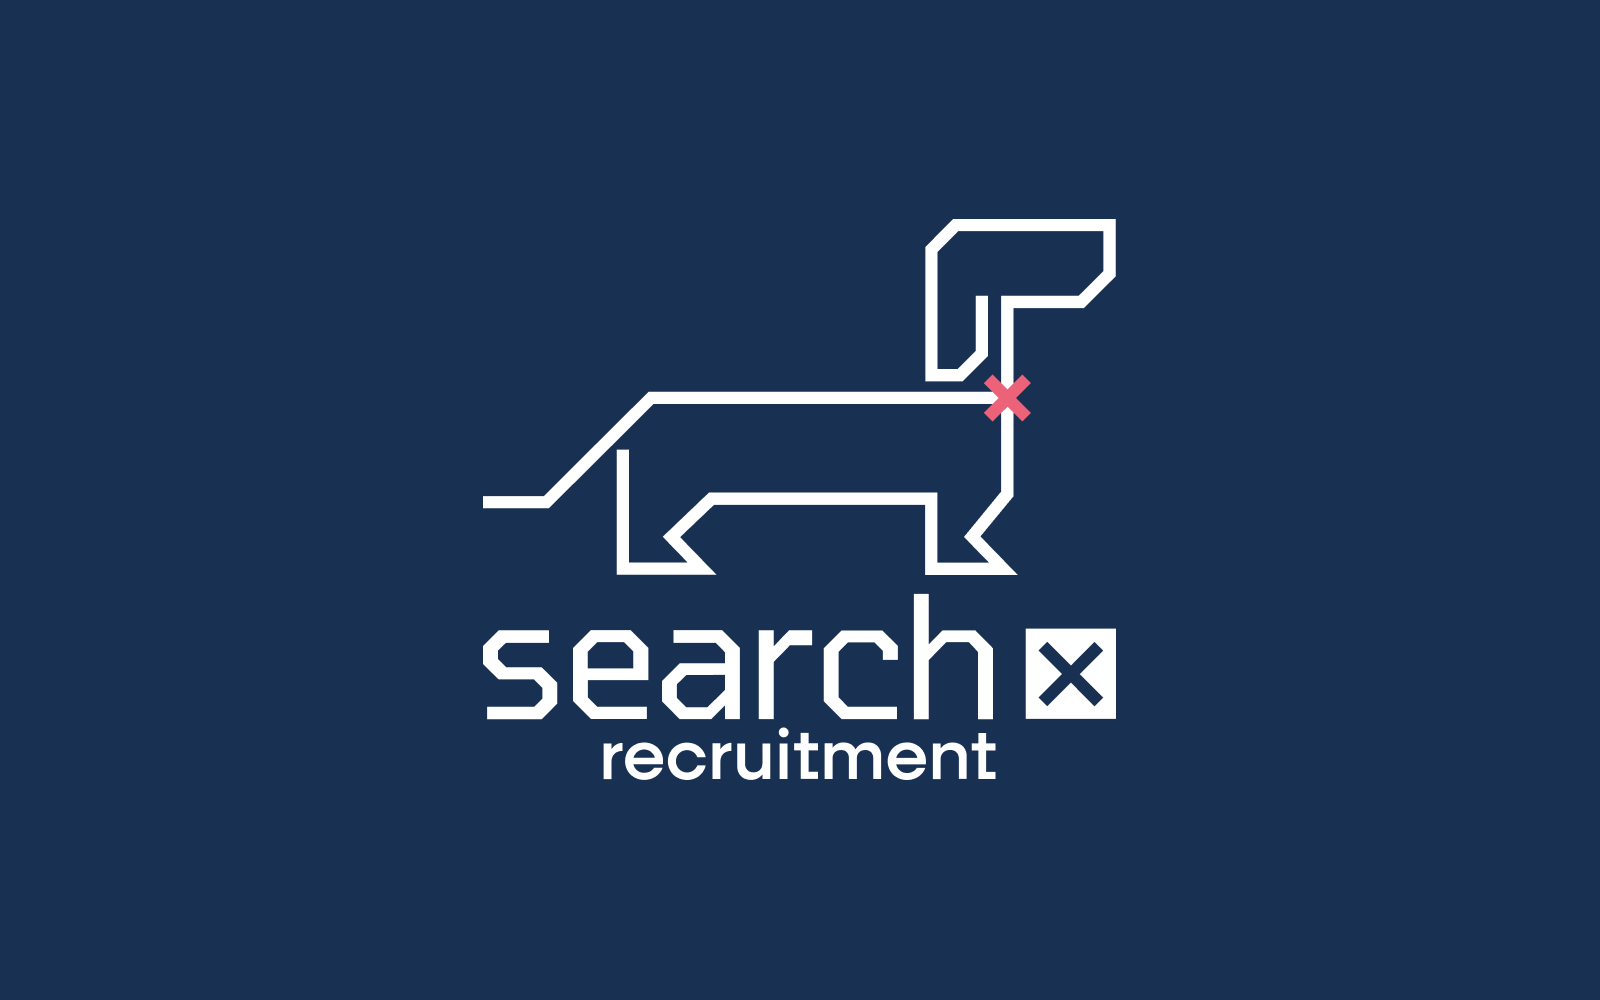 Search X Recruitment logo poster